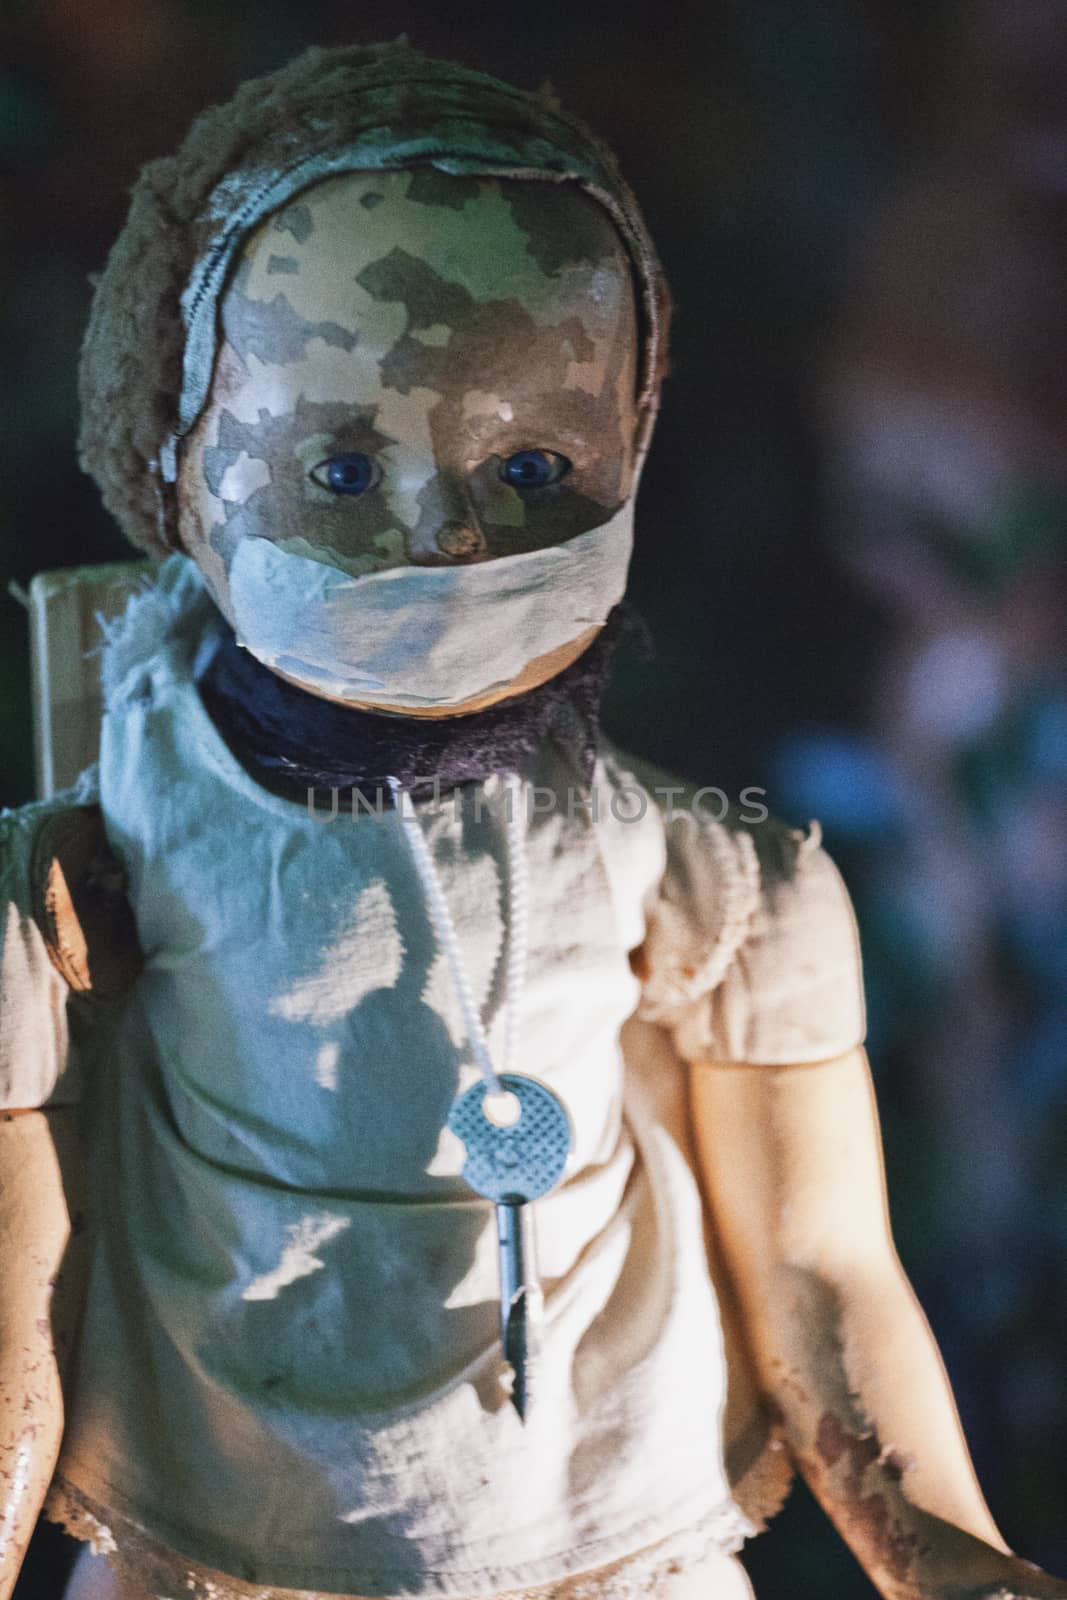 terrible doll from horror films by Jonicartoon